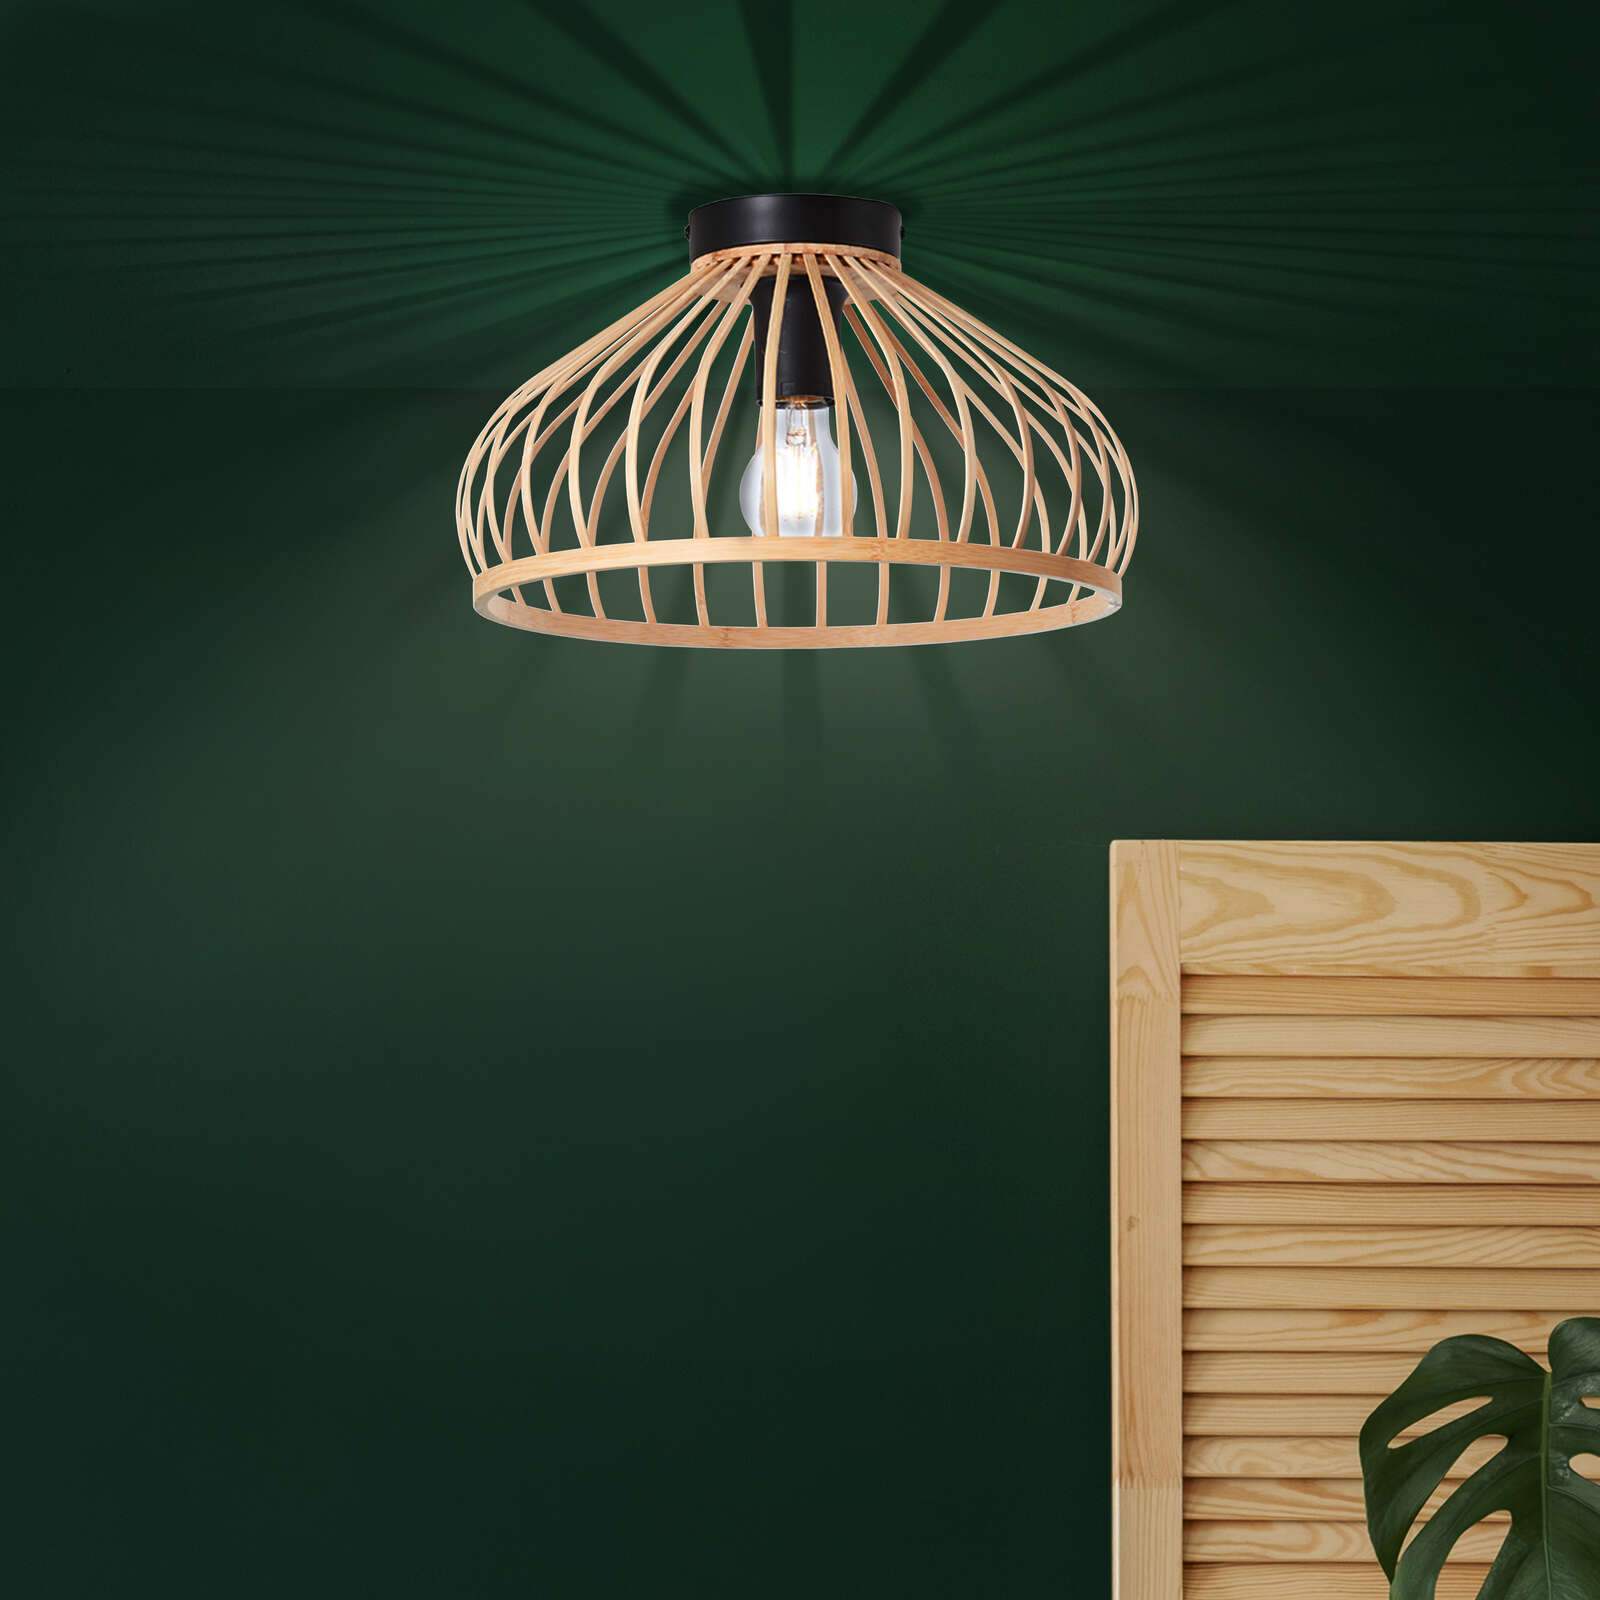             Bamboe plafondlamp - Luisa 2 - Bruin
        